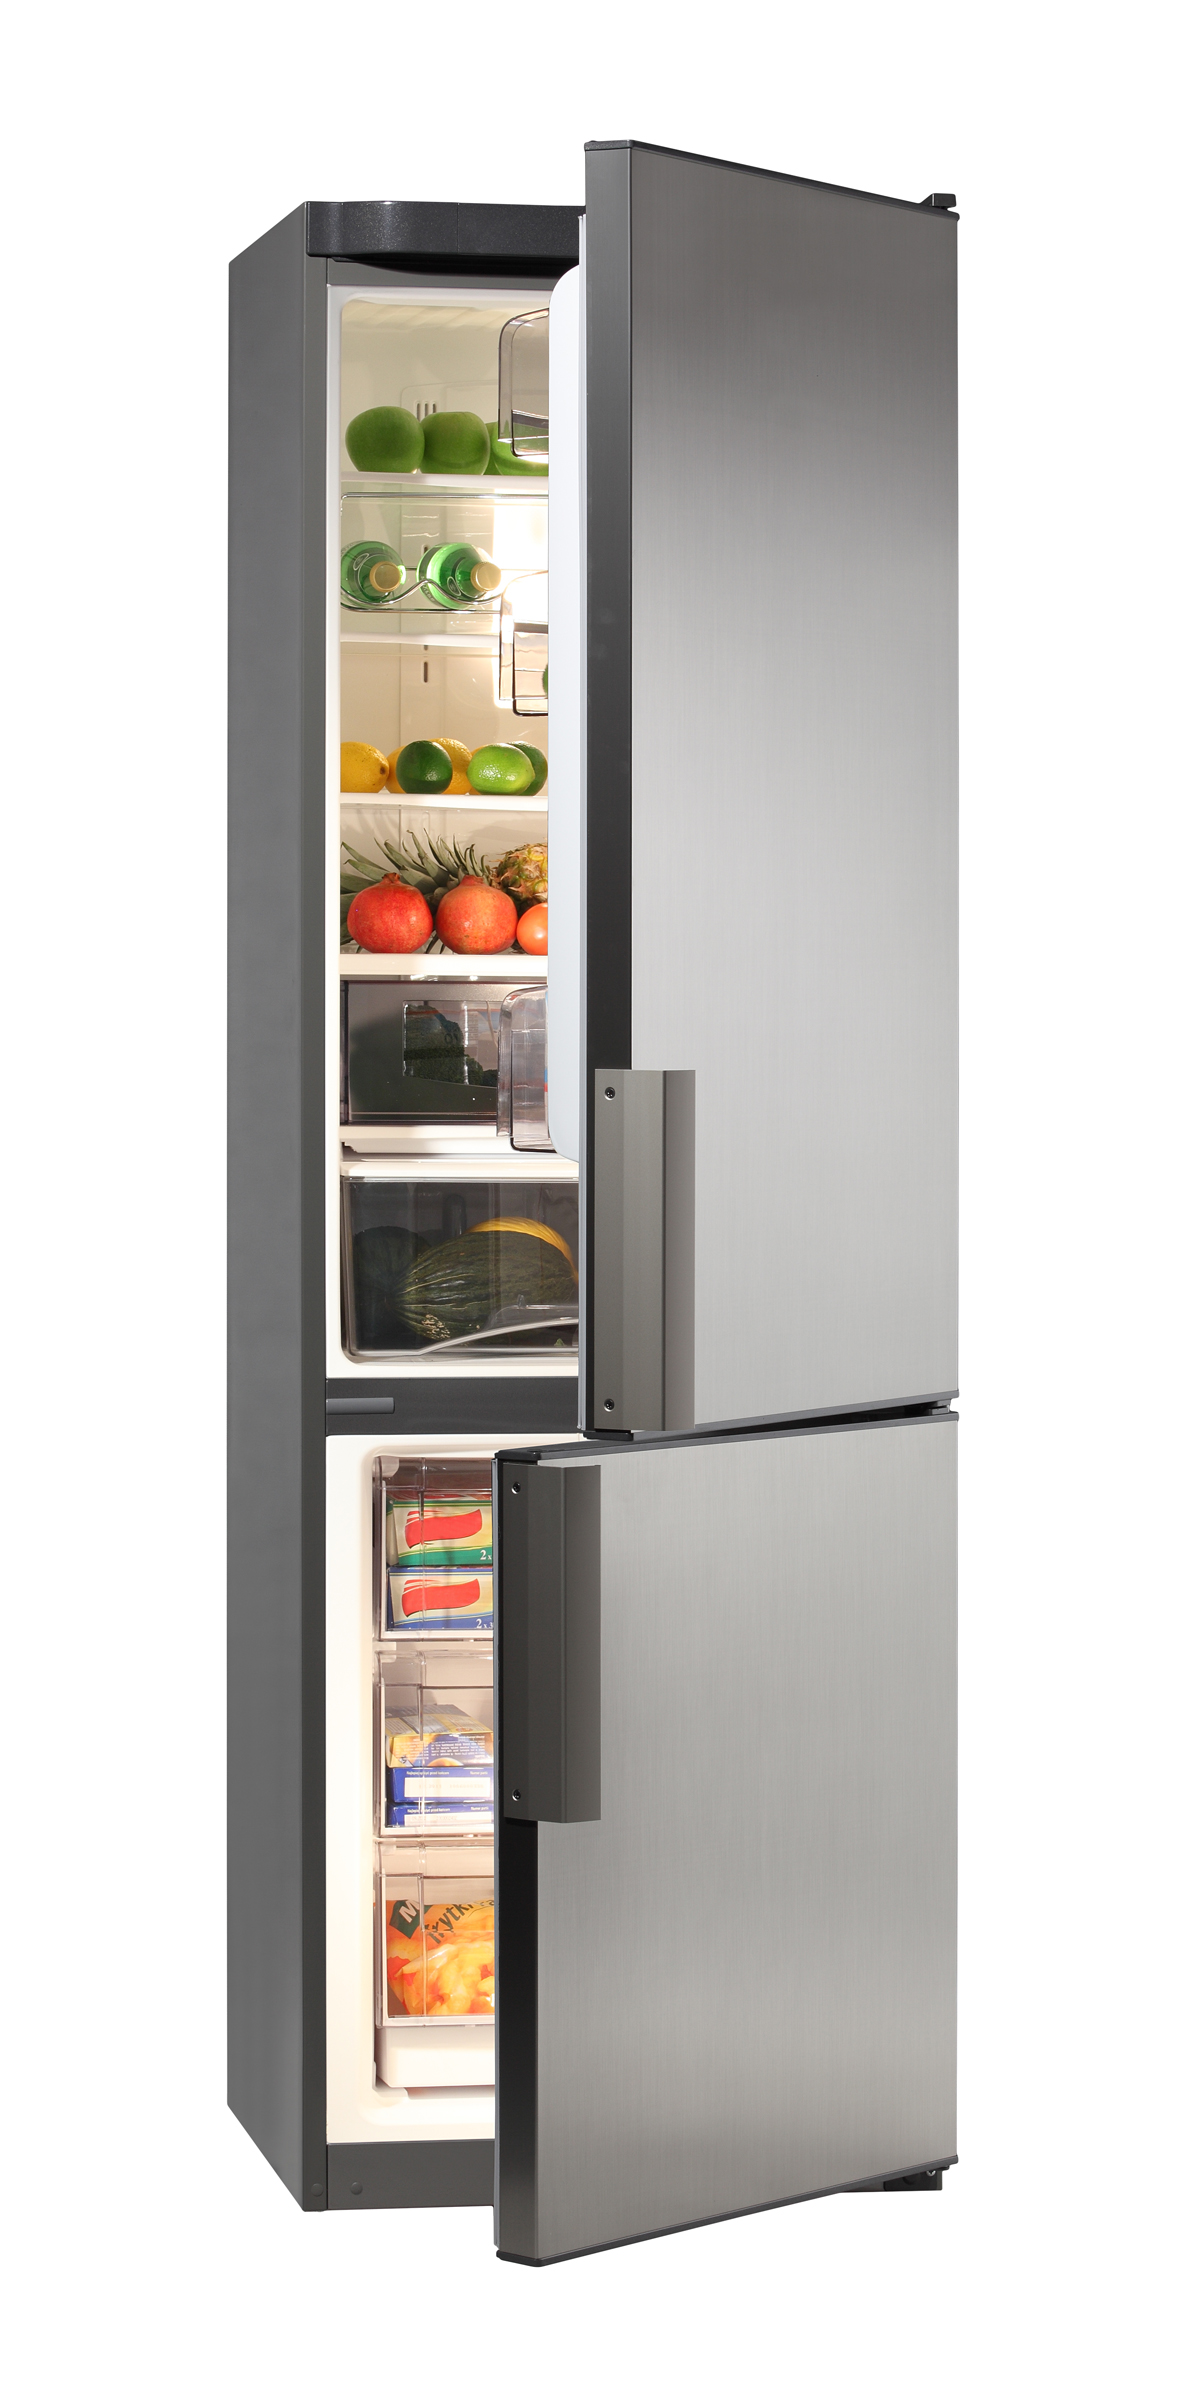 Сток холодильника. Ремонт холодильников картинки. Холодильник 80х.